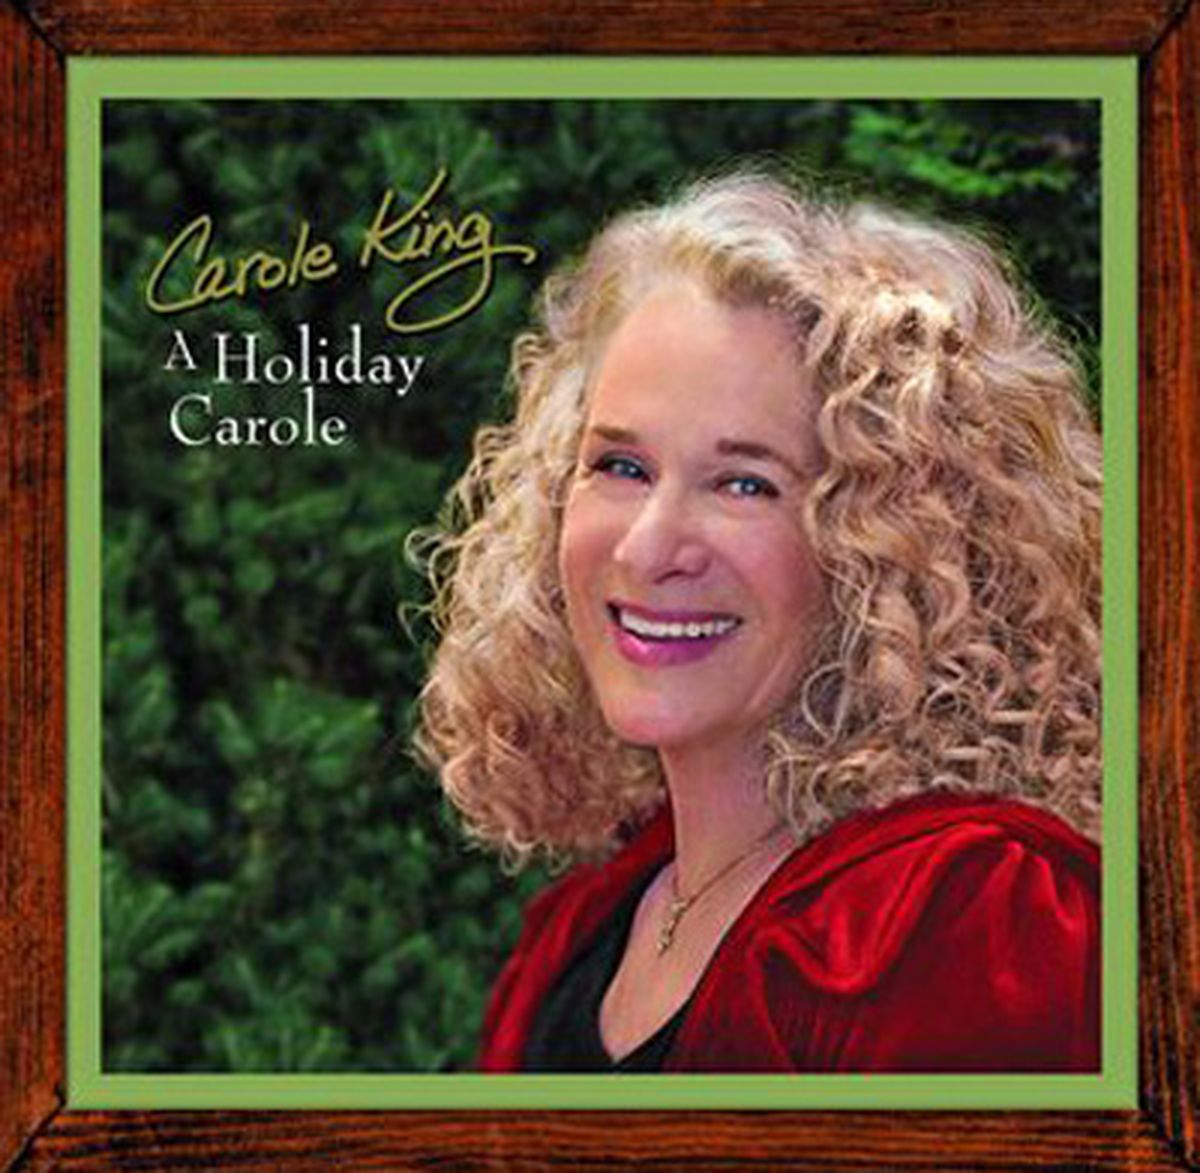 Carole King’s